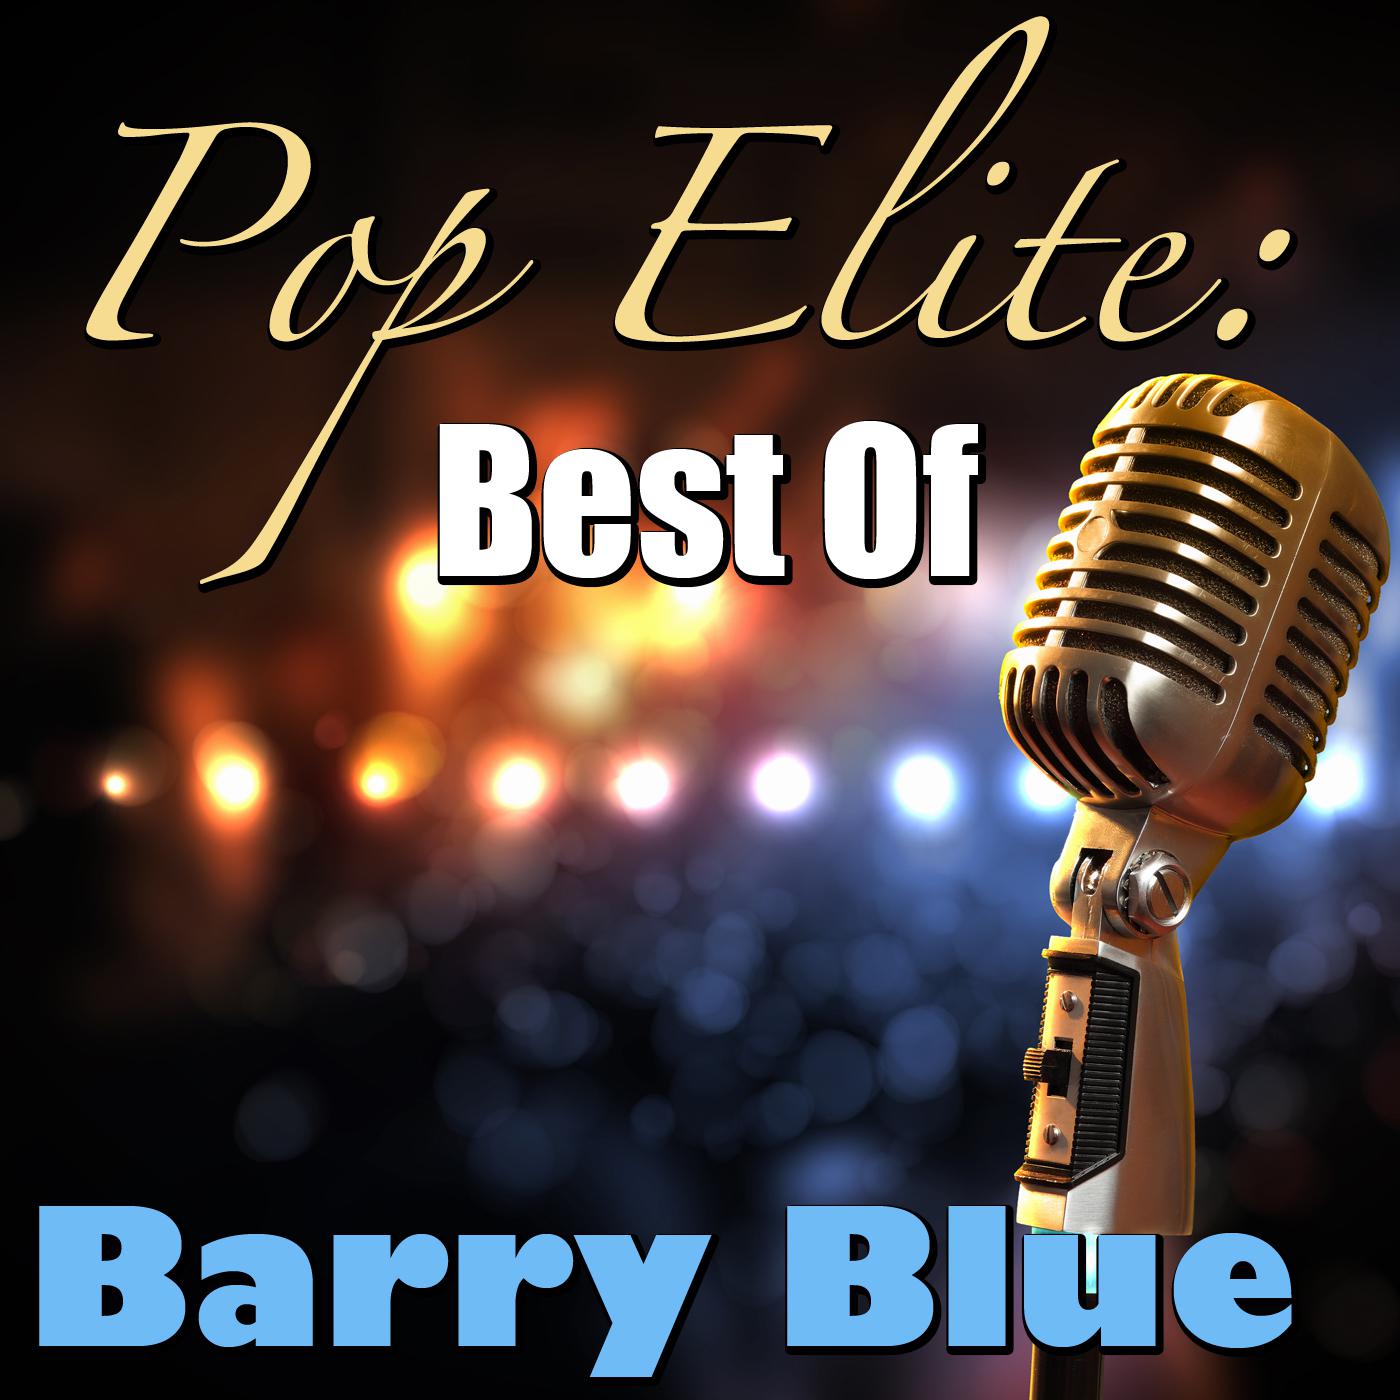 Pop Elite: Best Of Bob Luman